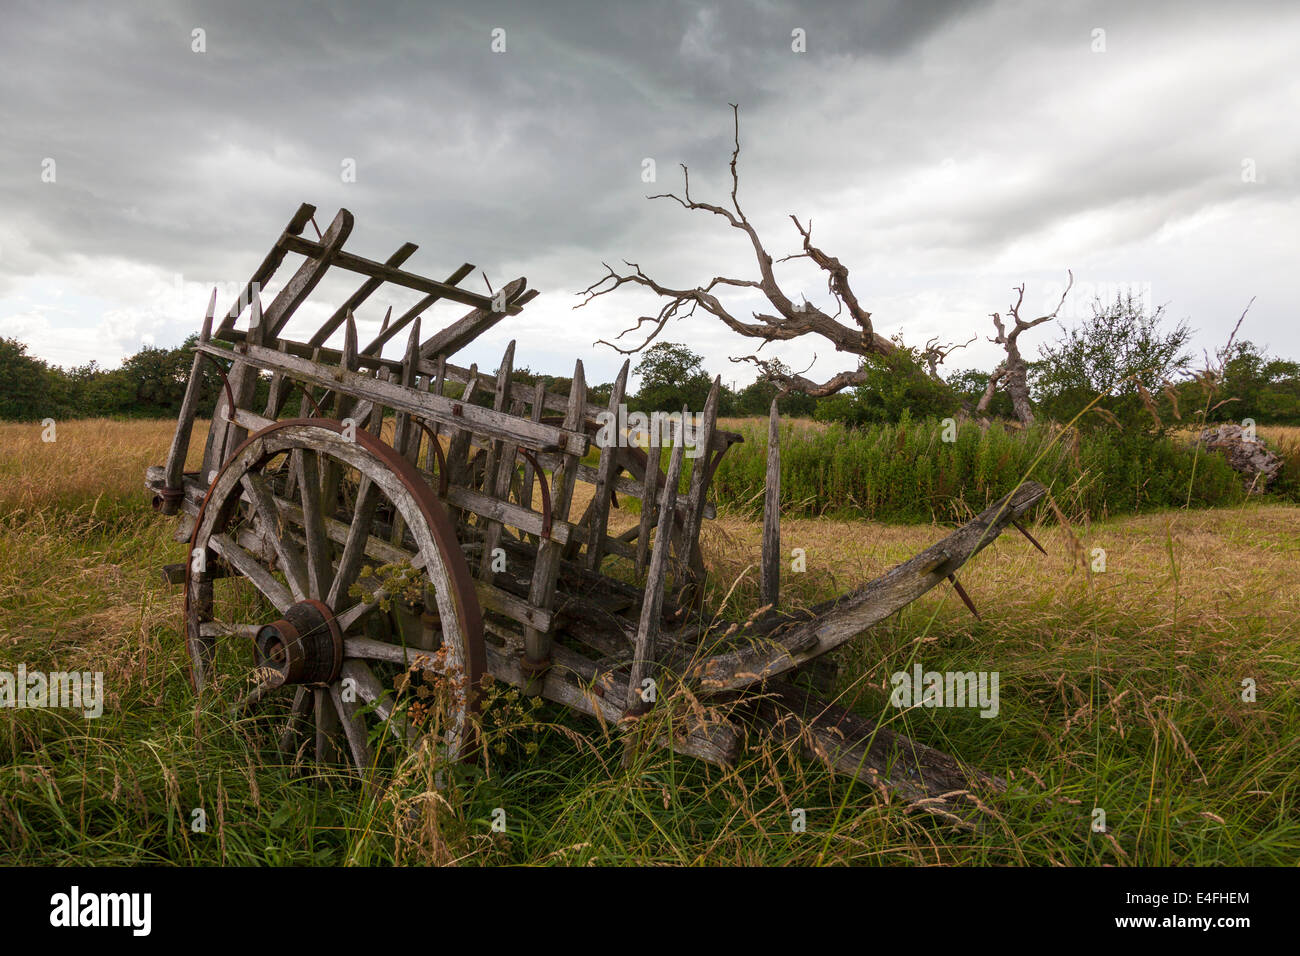 Old decrepit farming machinery antique farm cart holding pen with cartwheels Stock Photo